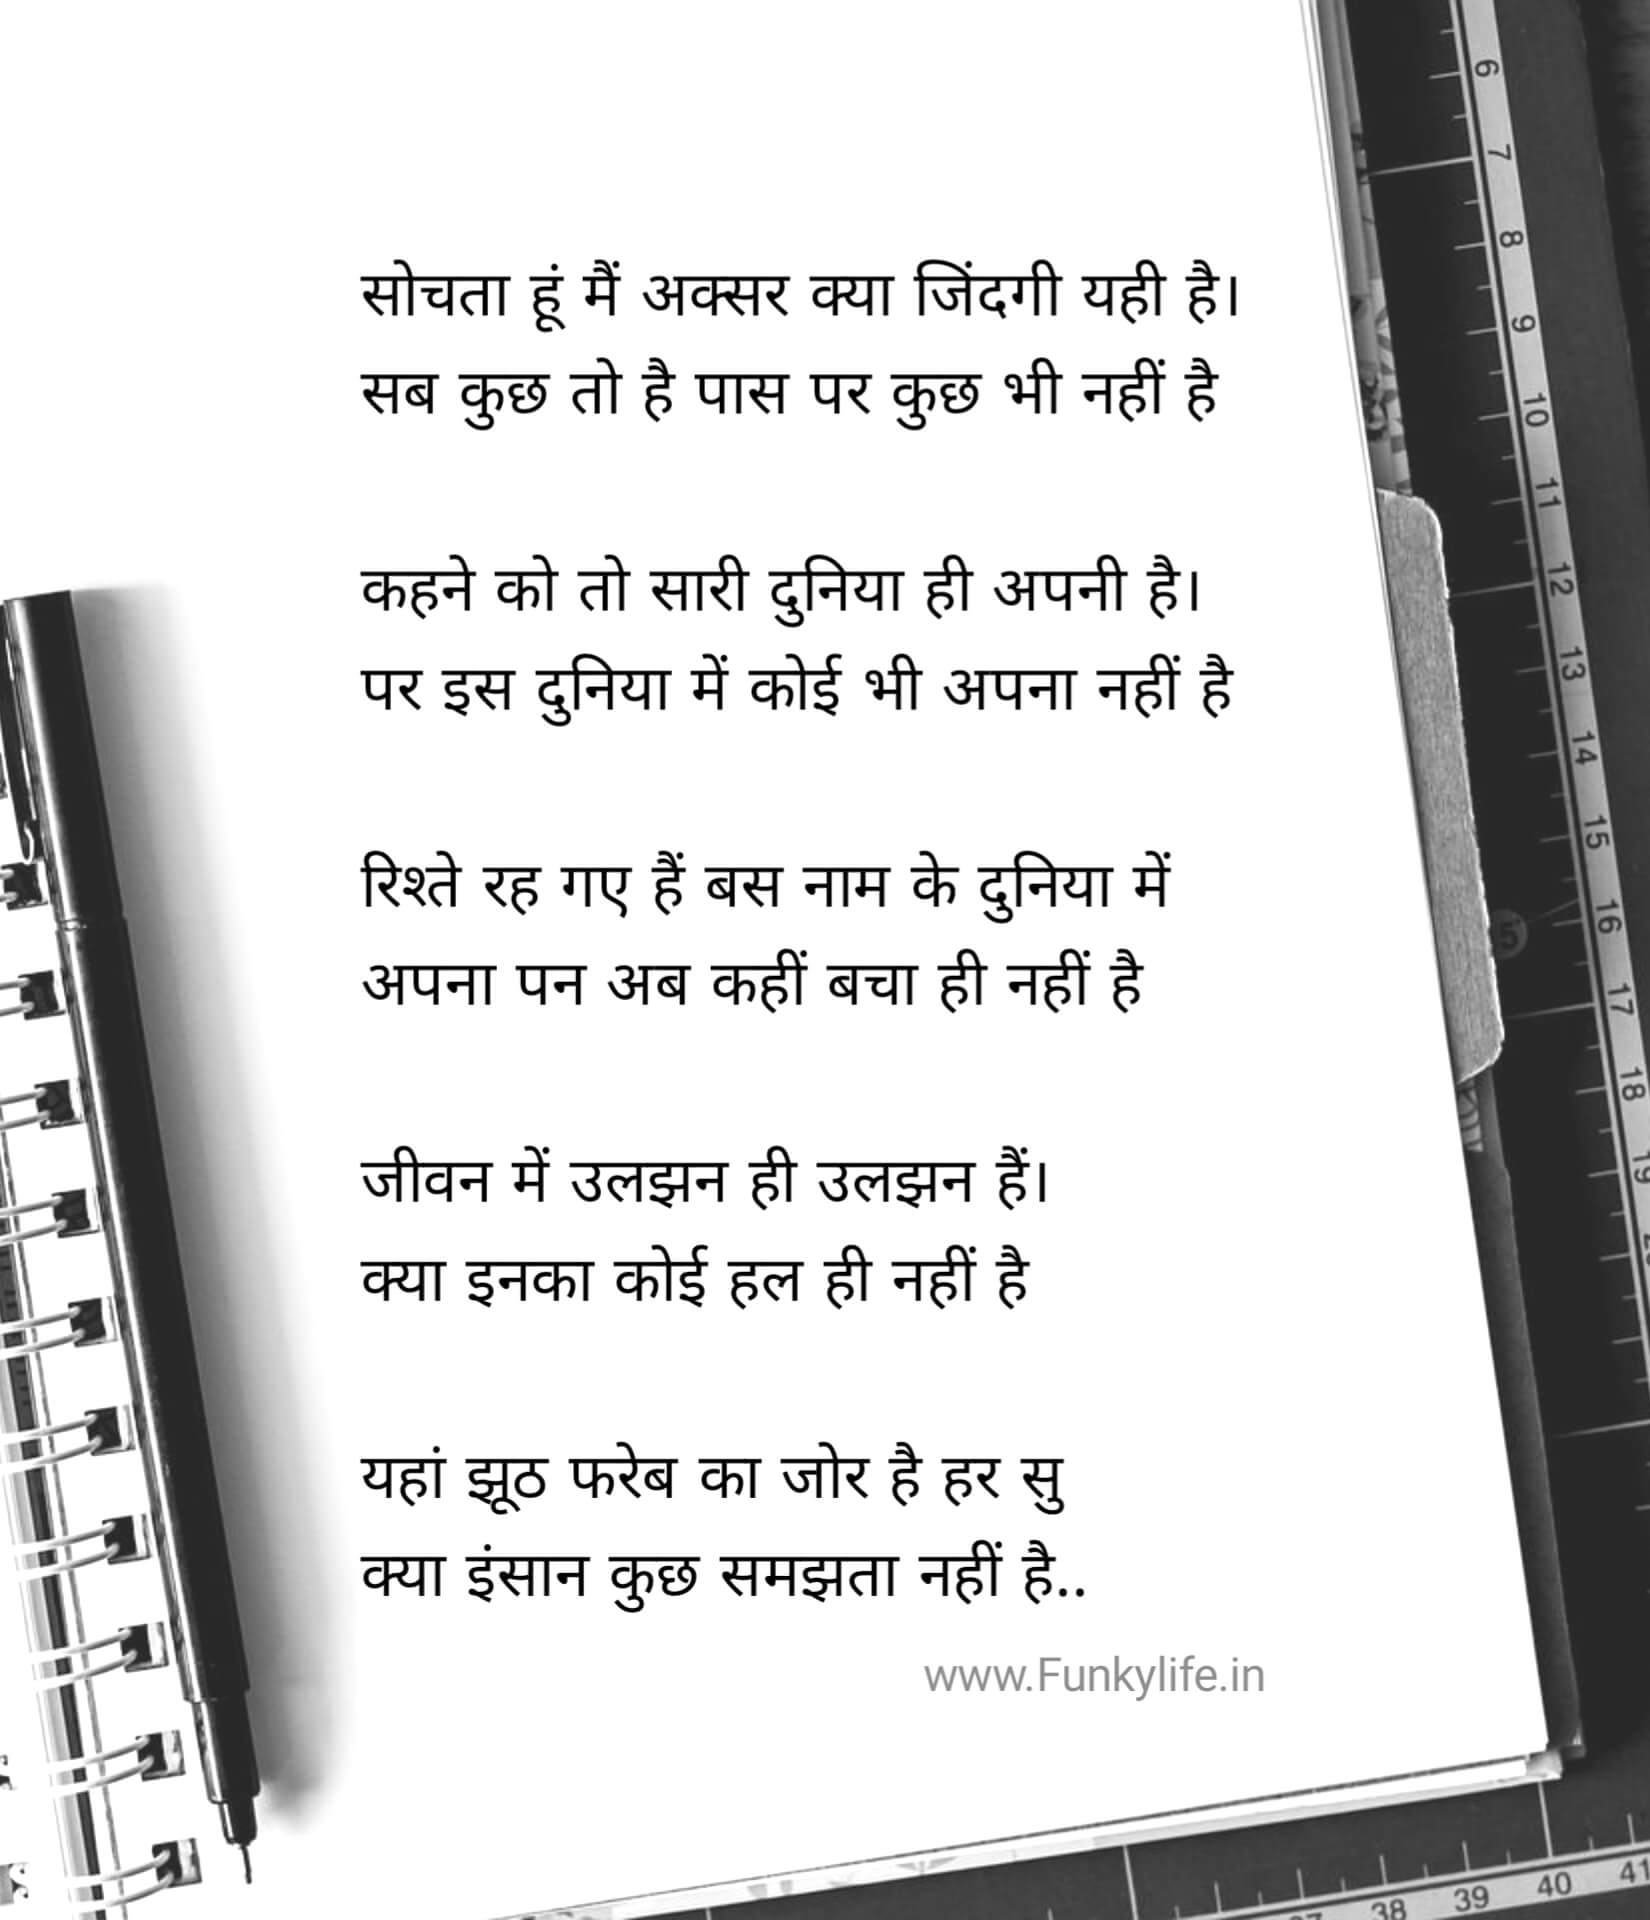 Hindi Poems on life #4